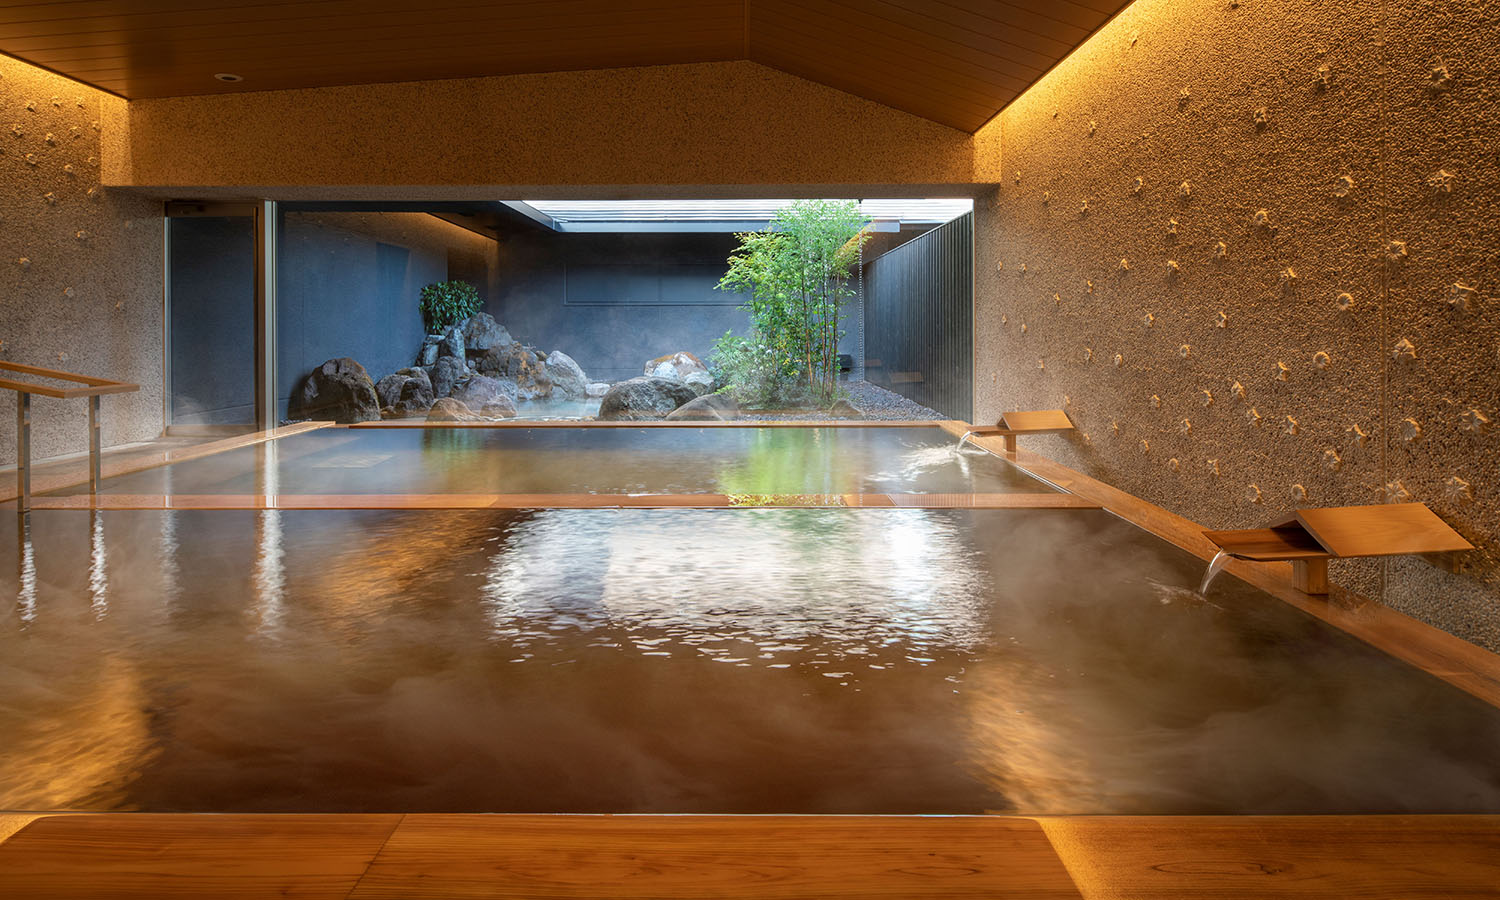 KAI Beppu Public Hot Springs. Photo credit: Hoshino Resorts